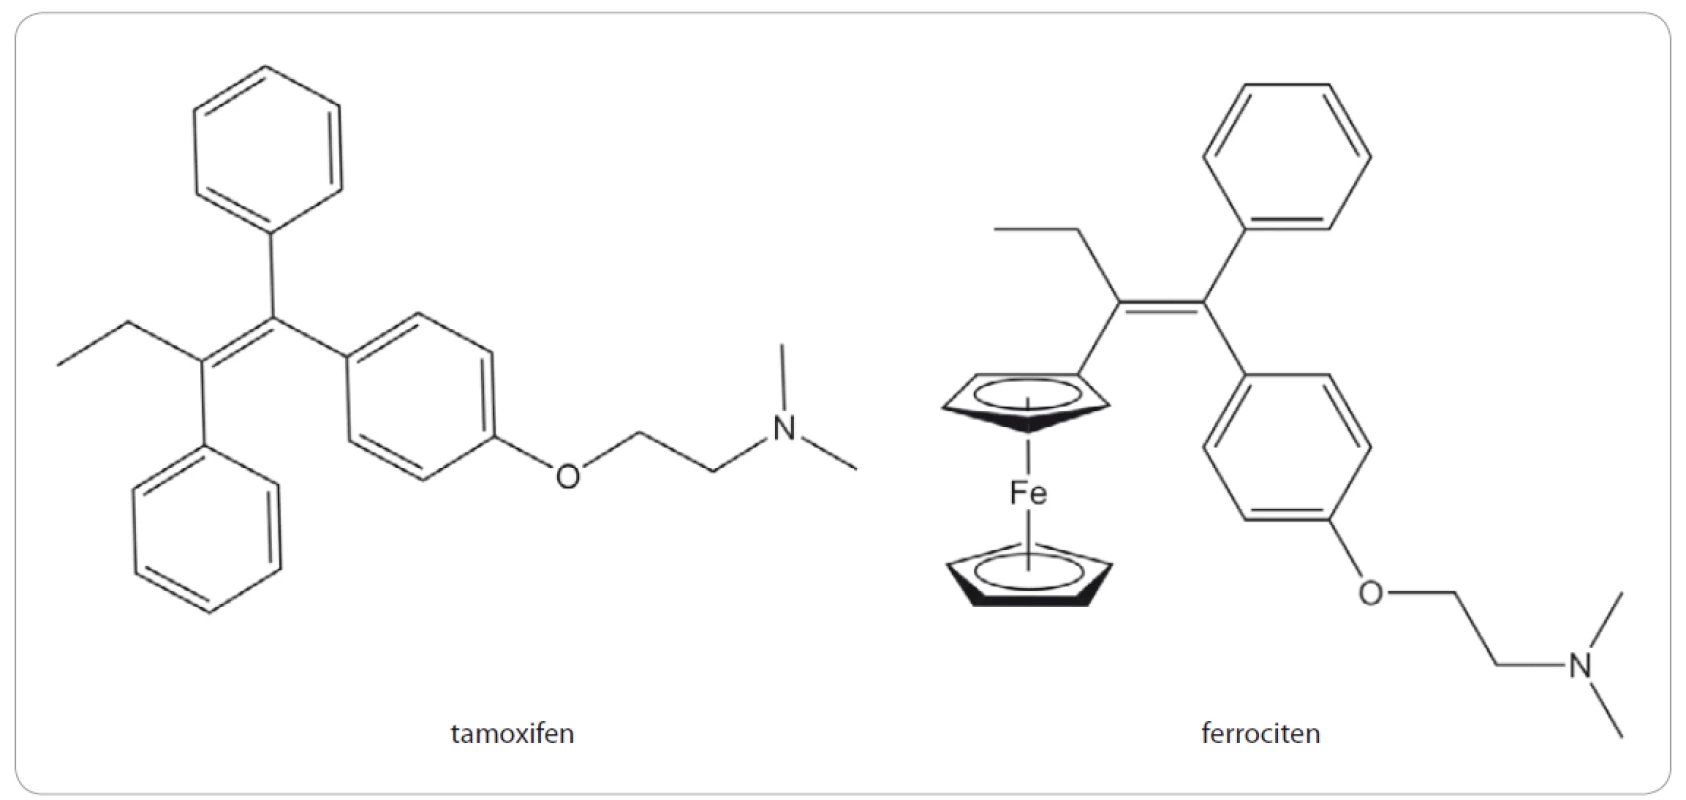 Strukturní vzorce tamoxifenu a ferrocifenu.